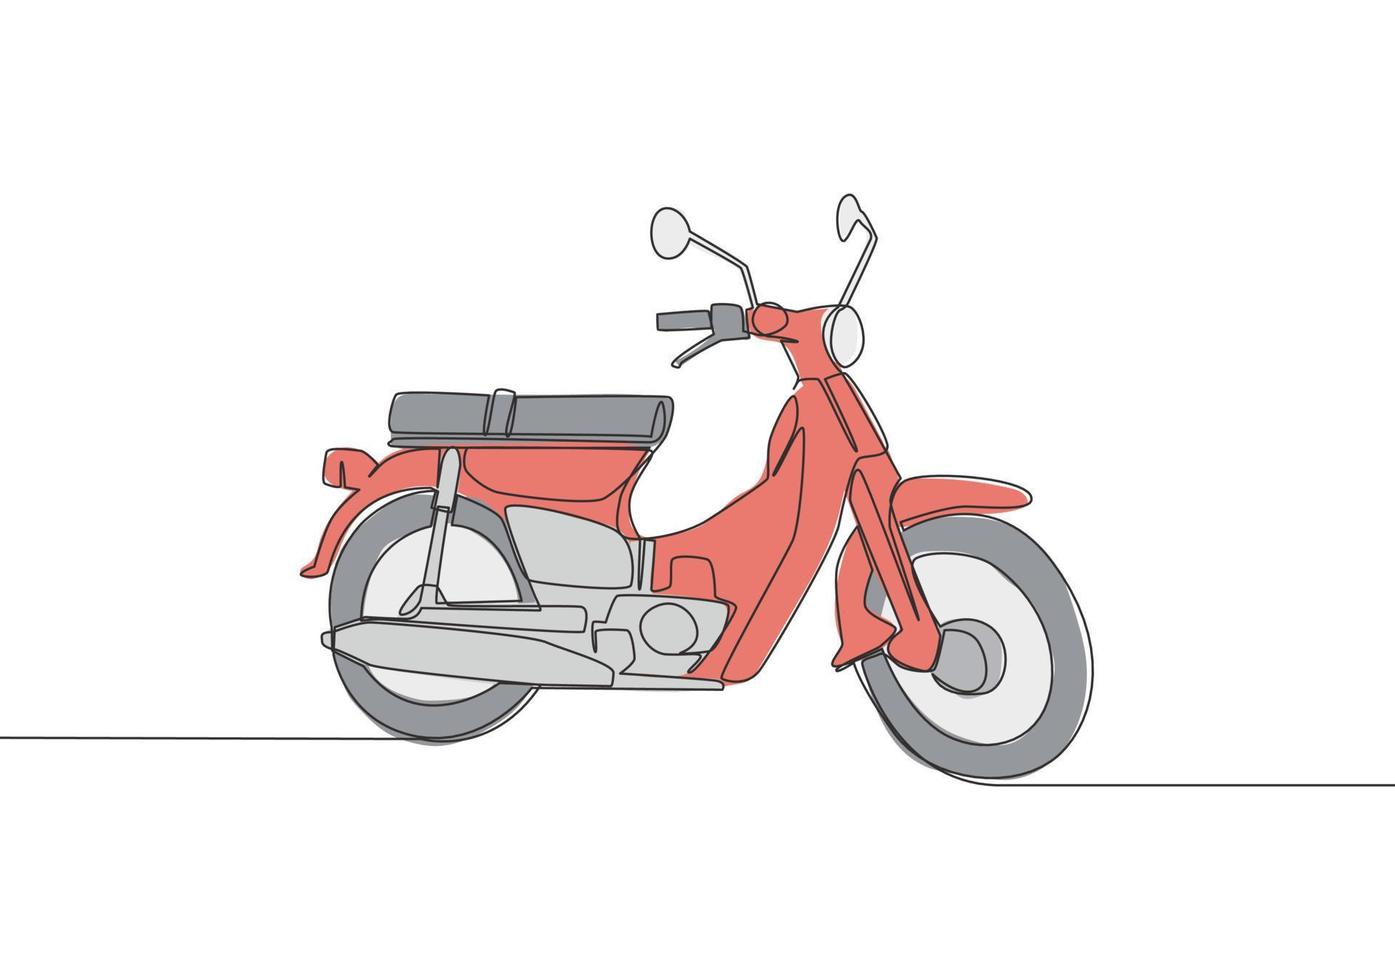 uno continuo línea dibujo de antiguo clásico asiático columna vertebral moto logo. Clásico motocicleta concepto. soltero línea dibujar diseño vector ilustración